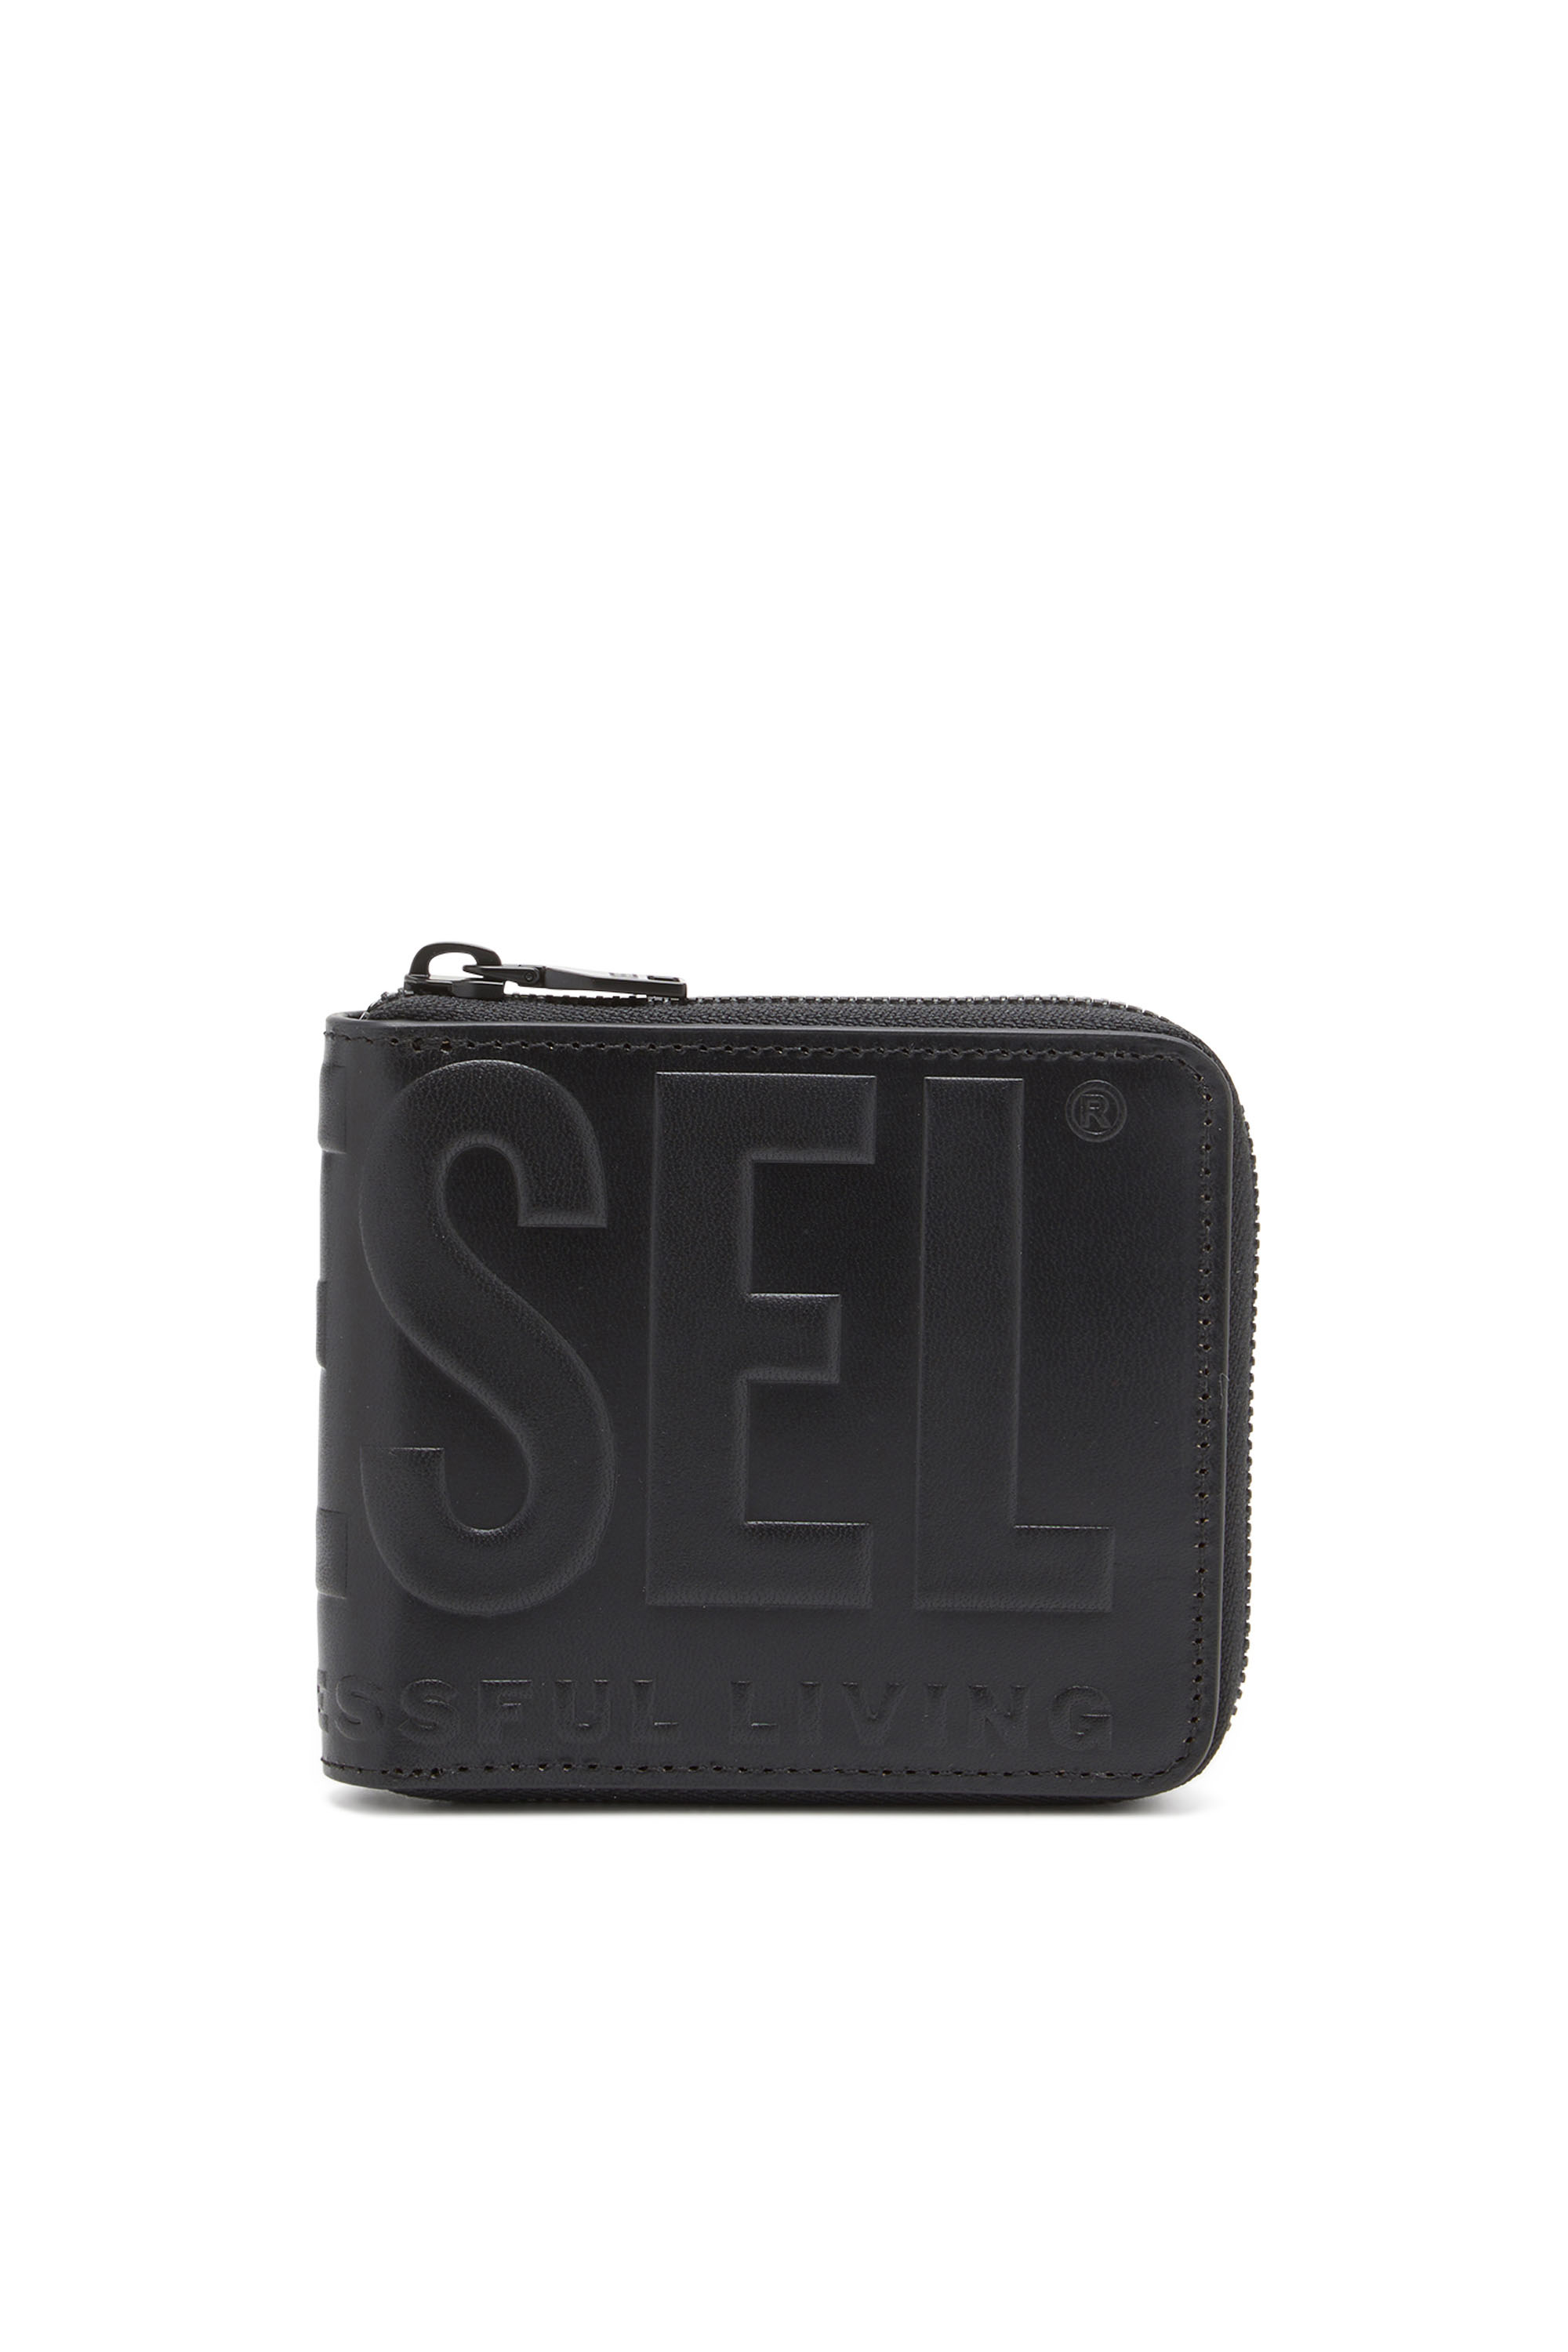 Diesel - Leather zip wallet with embossed logo - Small Wallets - Man - Black